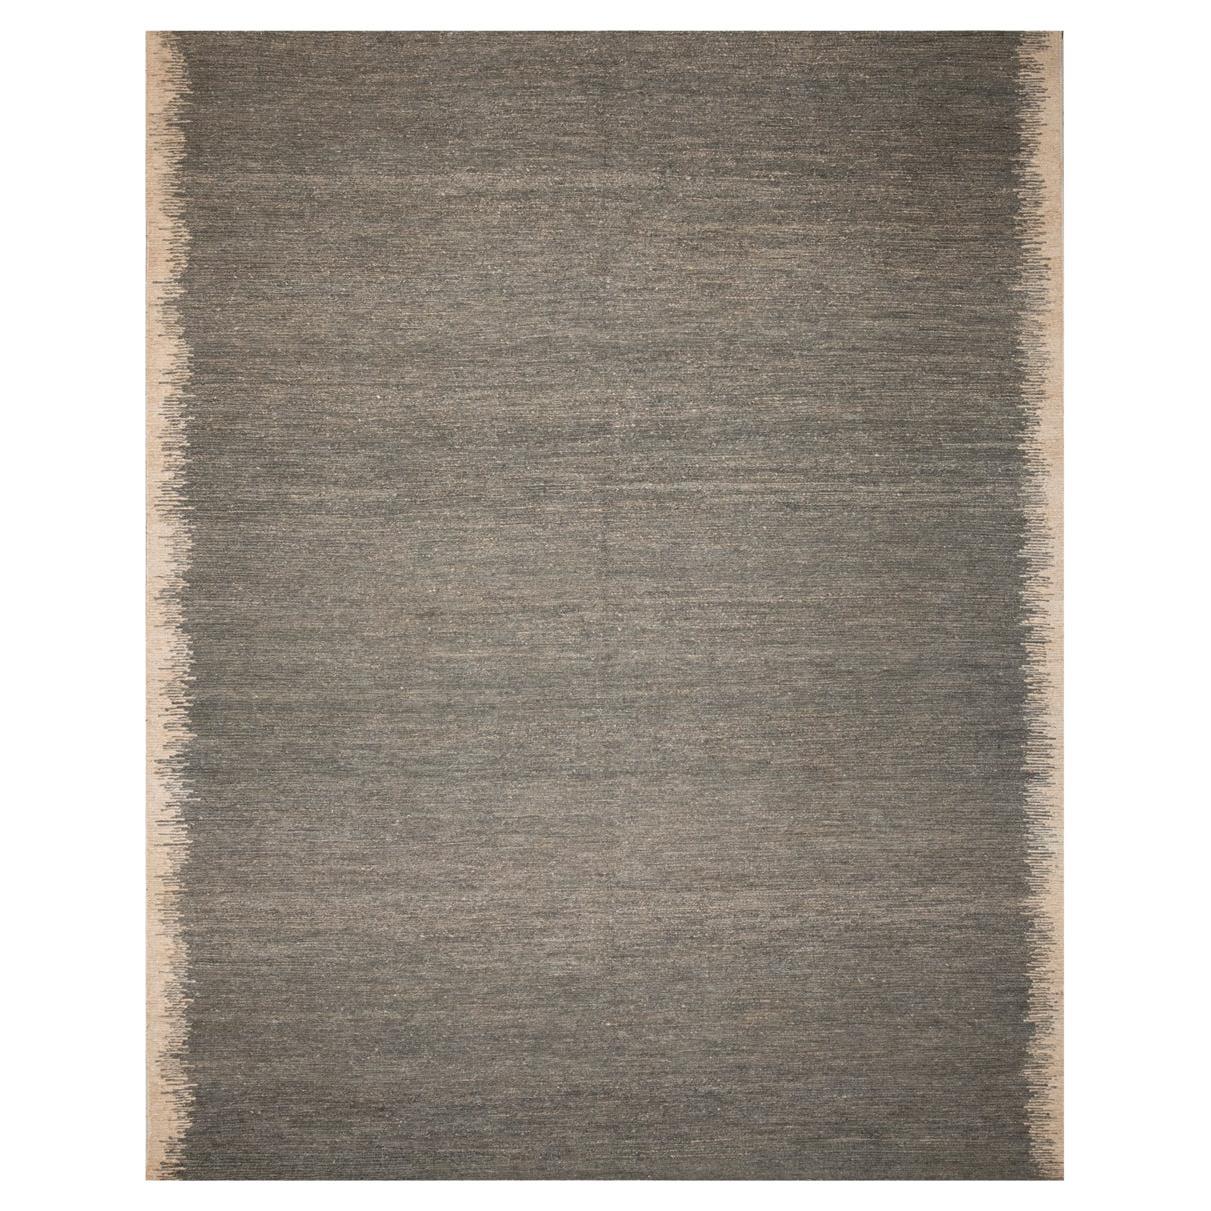 Modern Hand Braided Jute Carpet Rug in Grey&Ivory degraded Shades